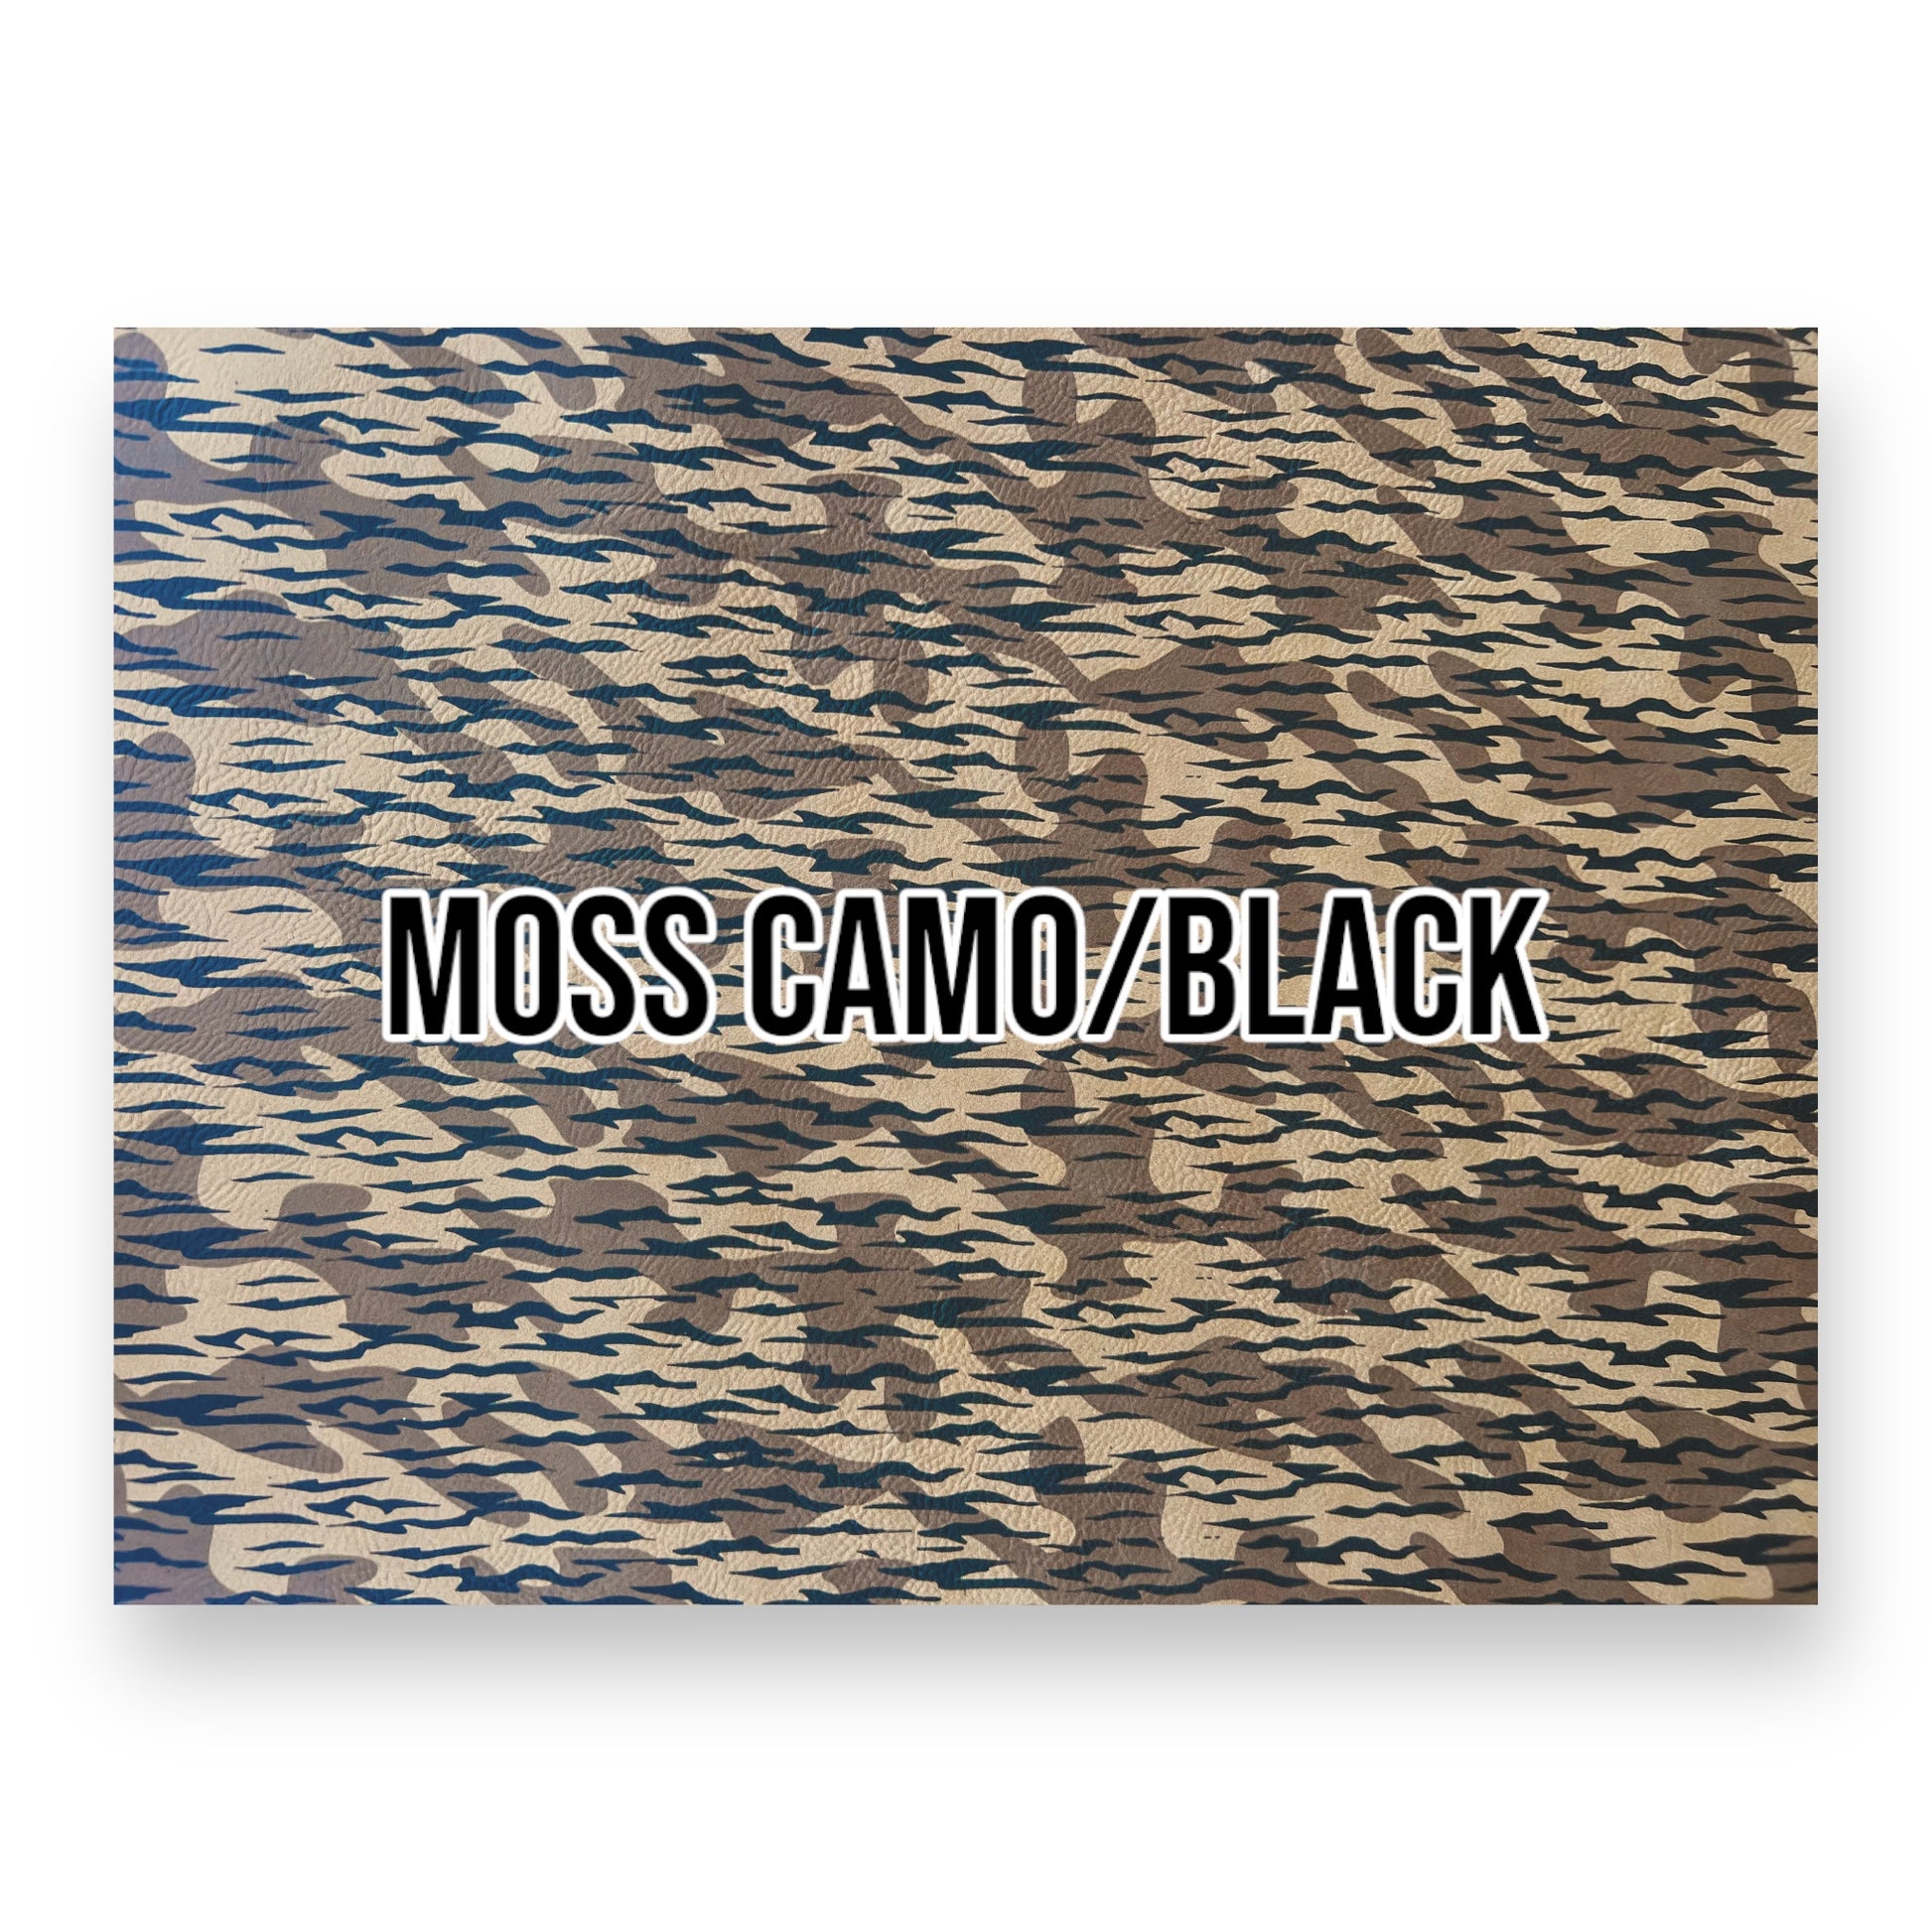 MOSS CAMO/BLACK HYDBOND LEATHERETTE SHEET (12x24